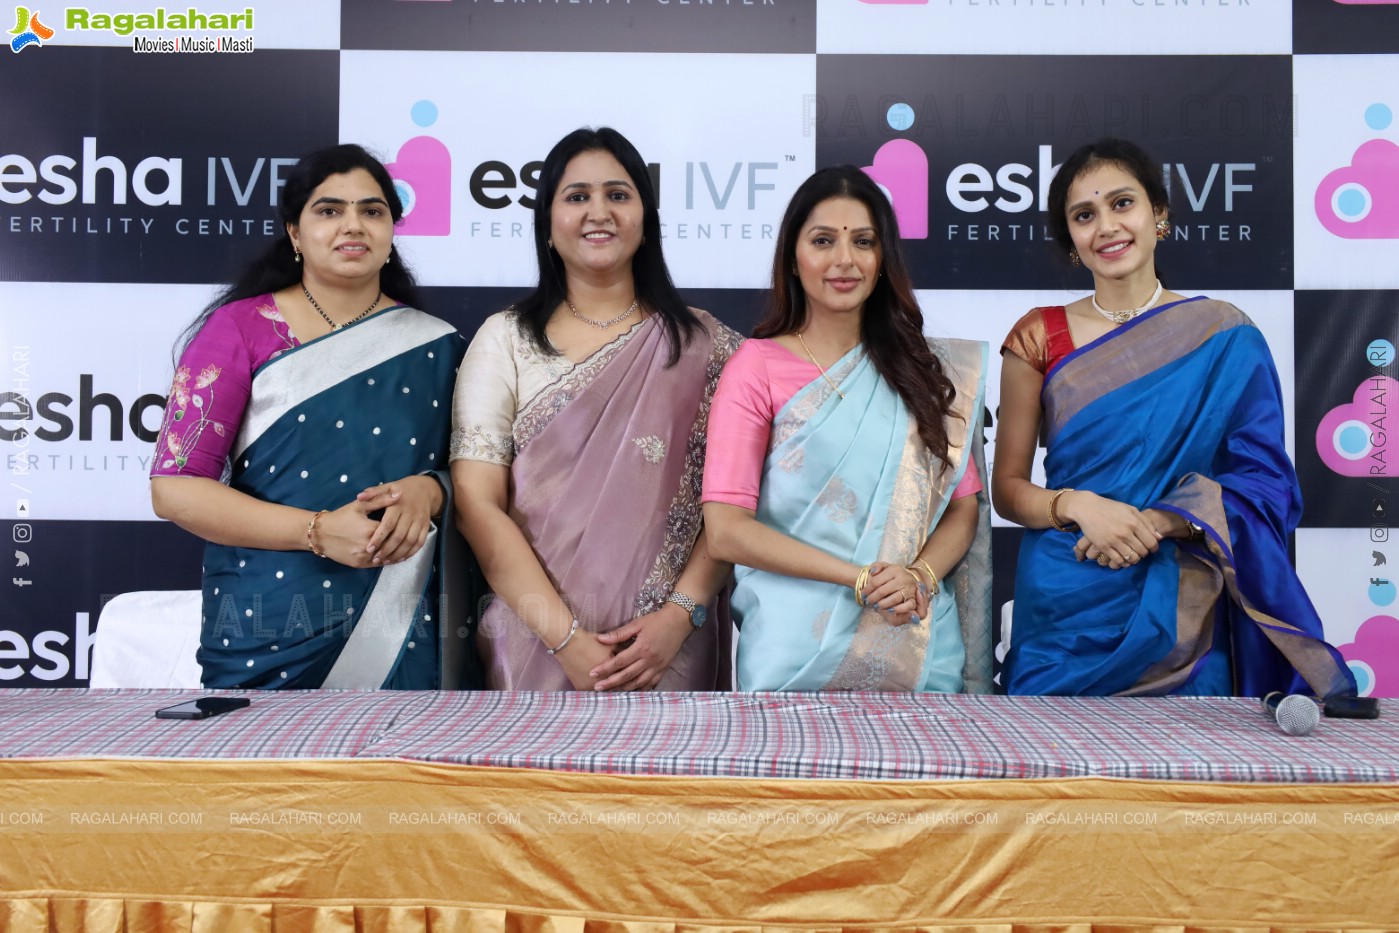 Esha IVF Fertility Center Launch